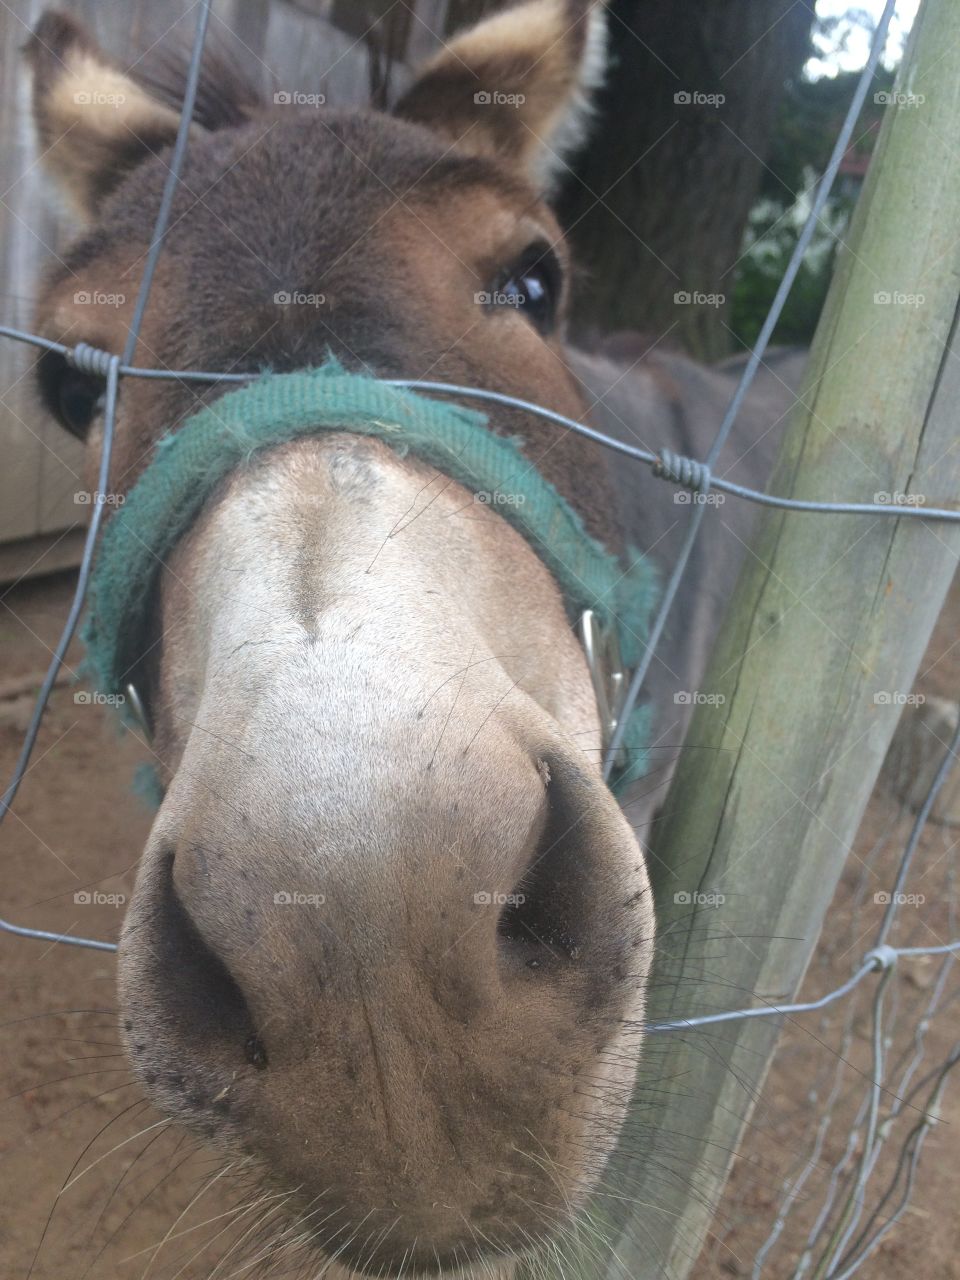 Hey, look at my ass (donkey)!